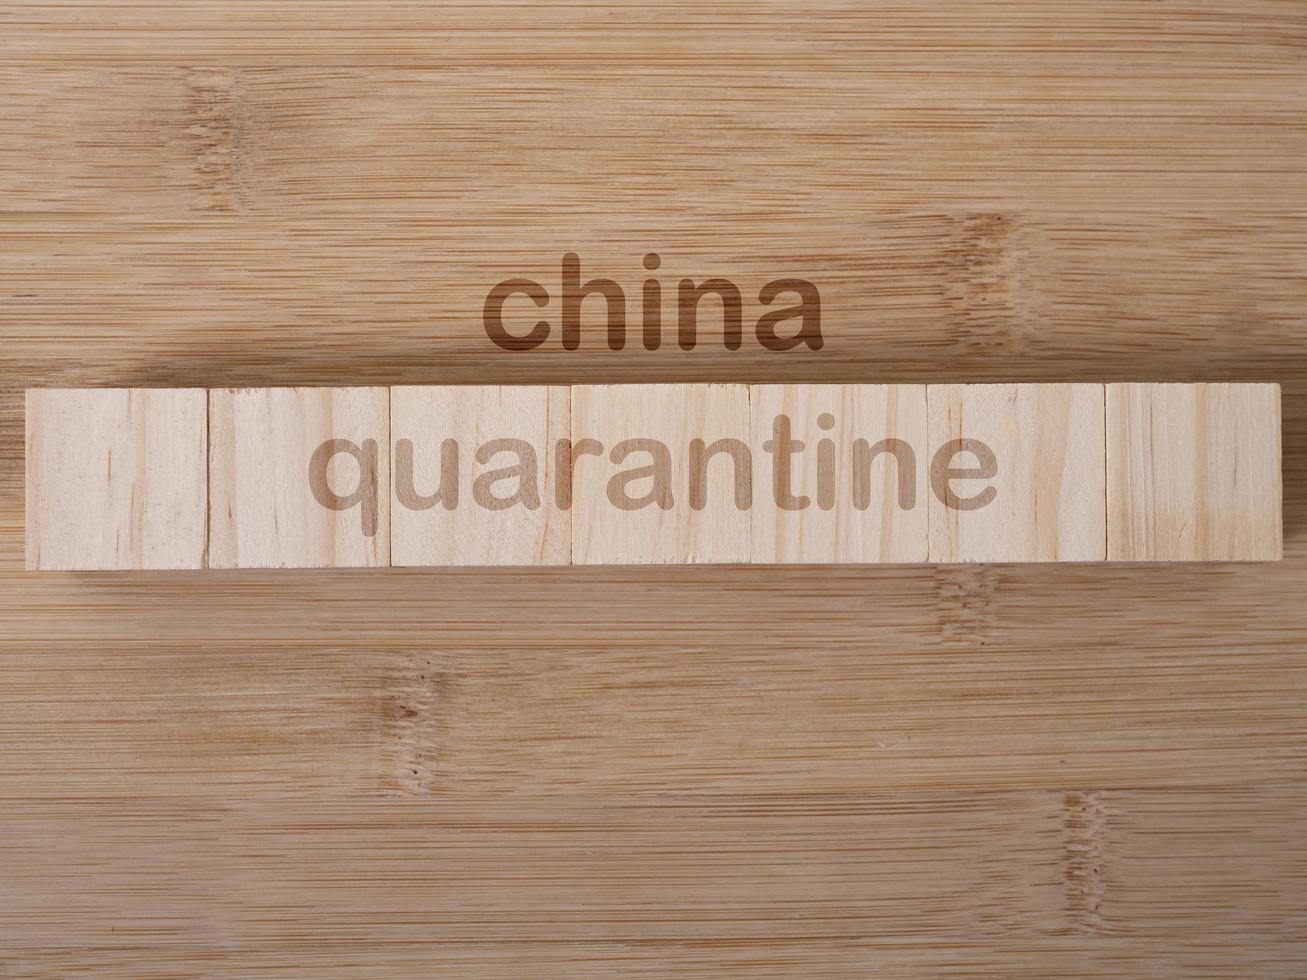 palabra de cuarentena china escrita en bloque de madera. texto de cuarentena de china en madera foto